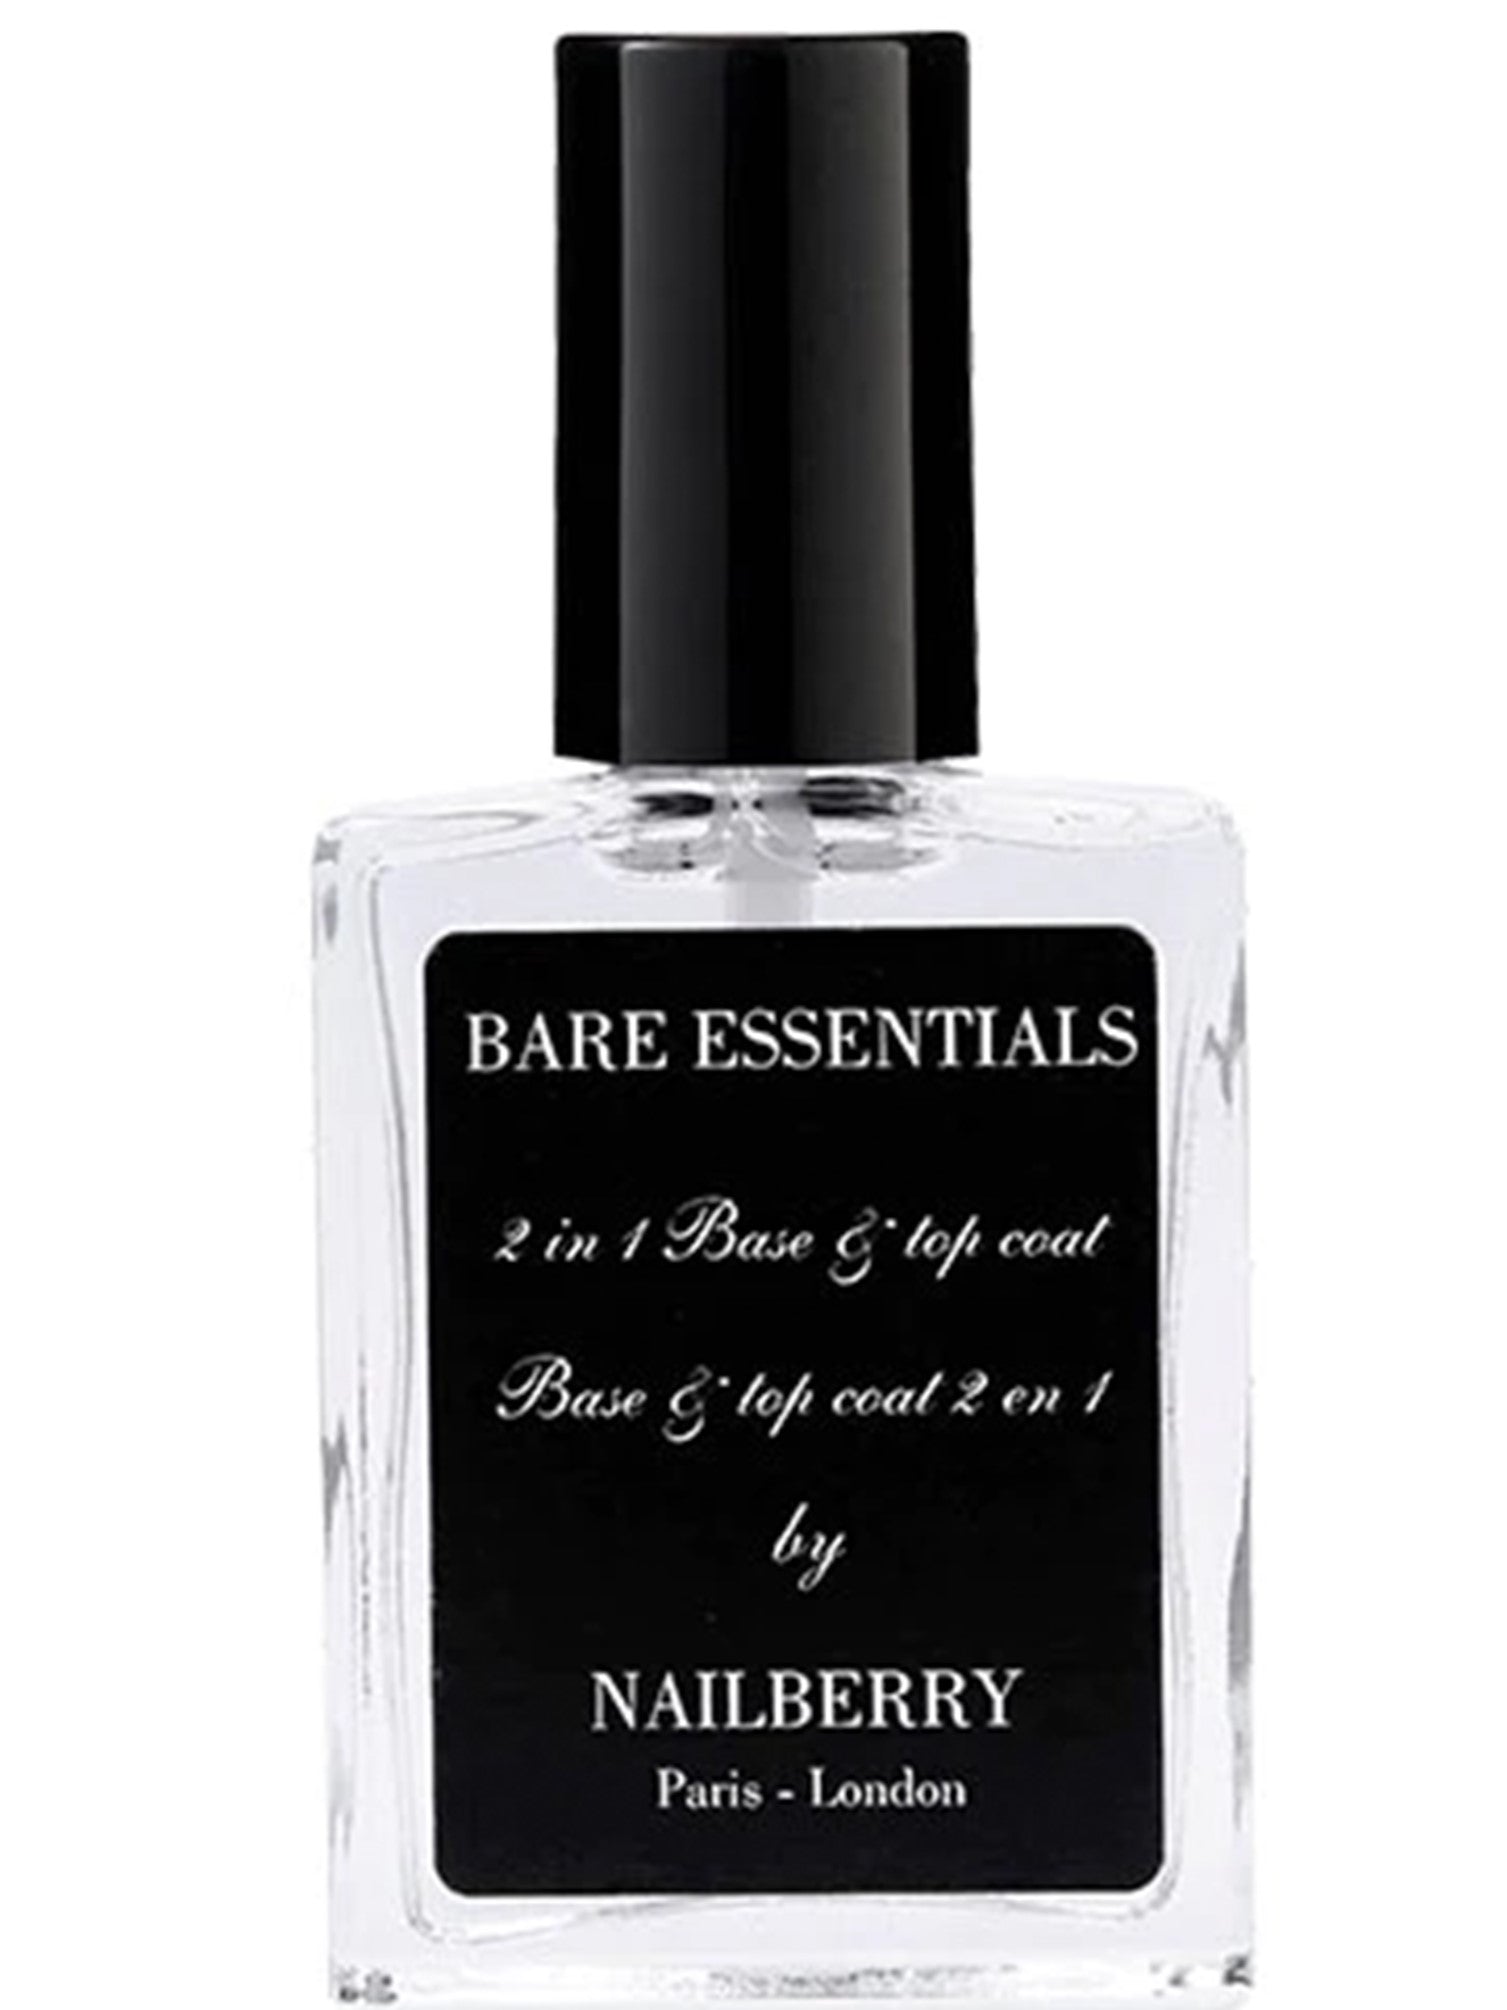 Nailberry Bare Essentials